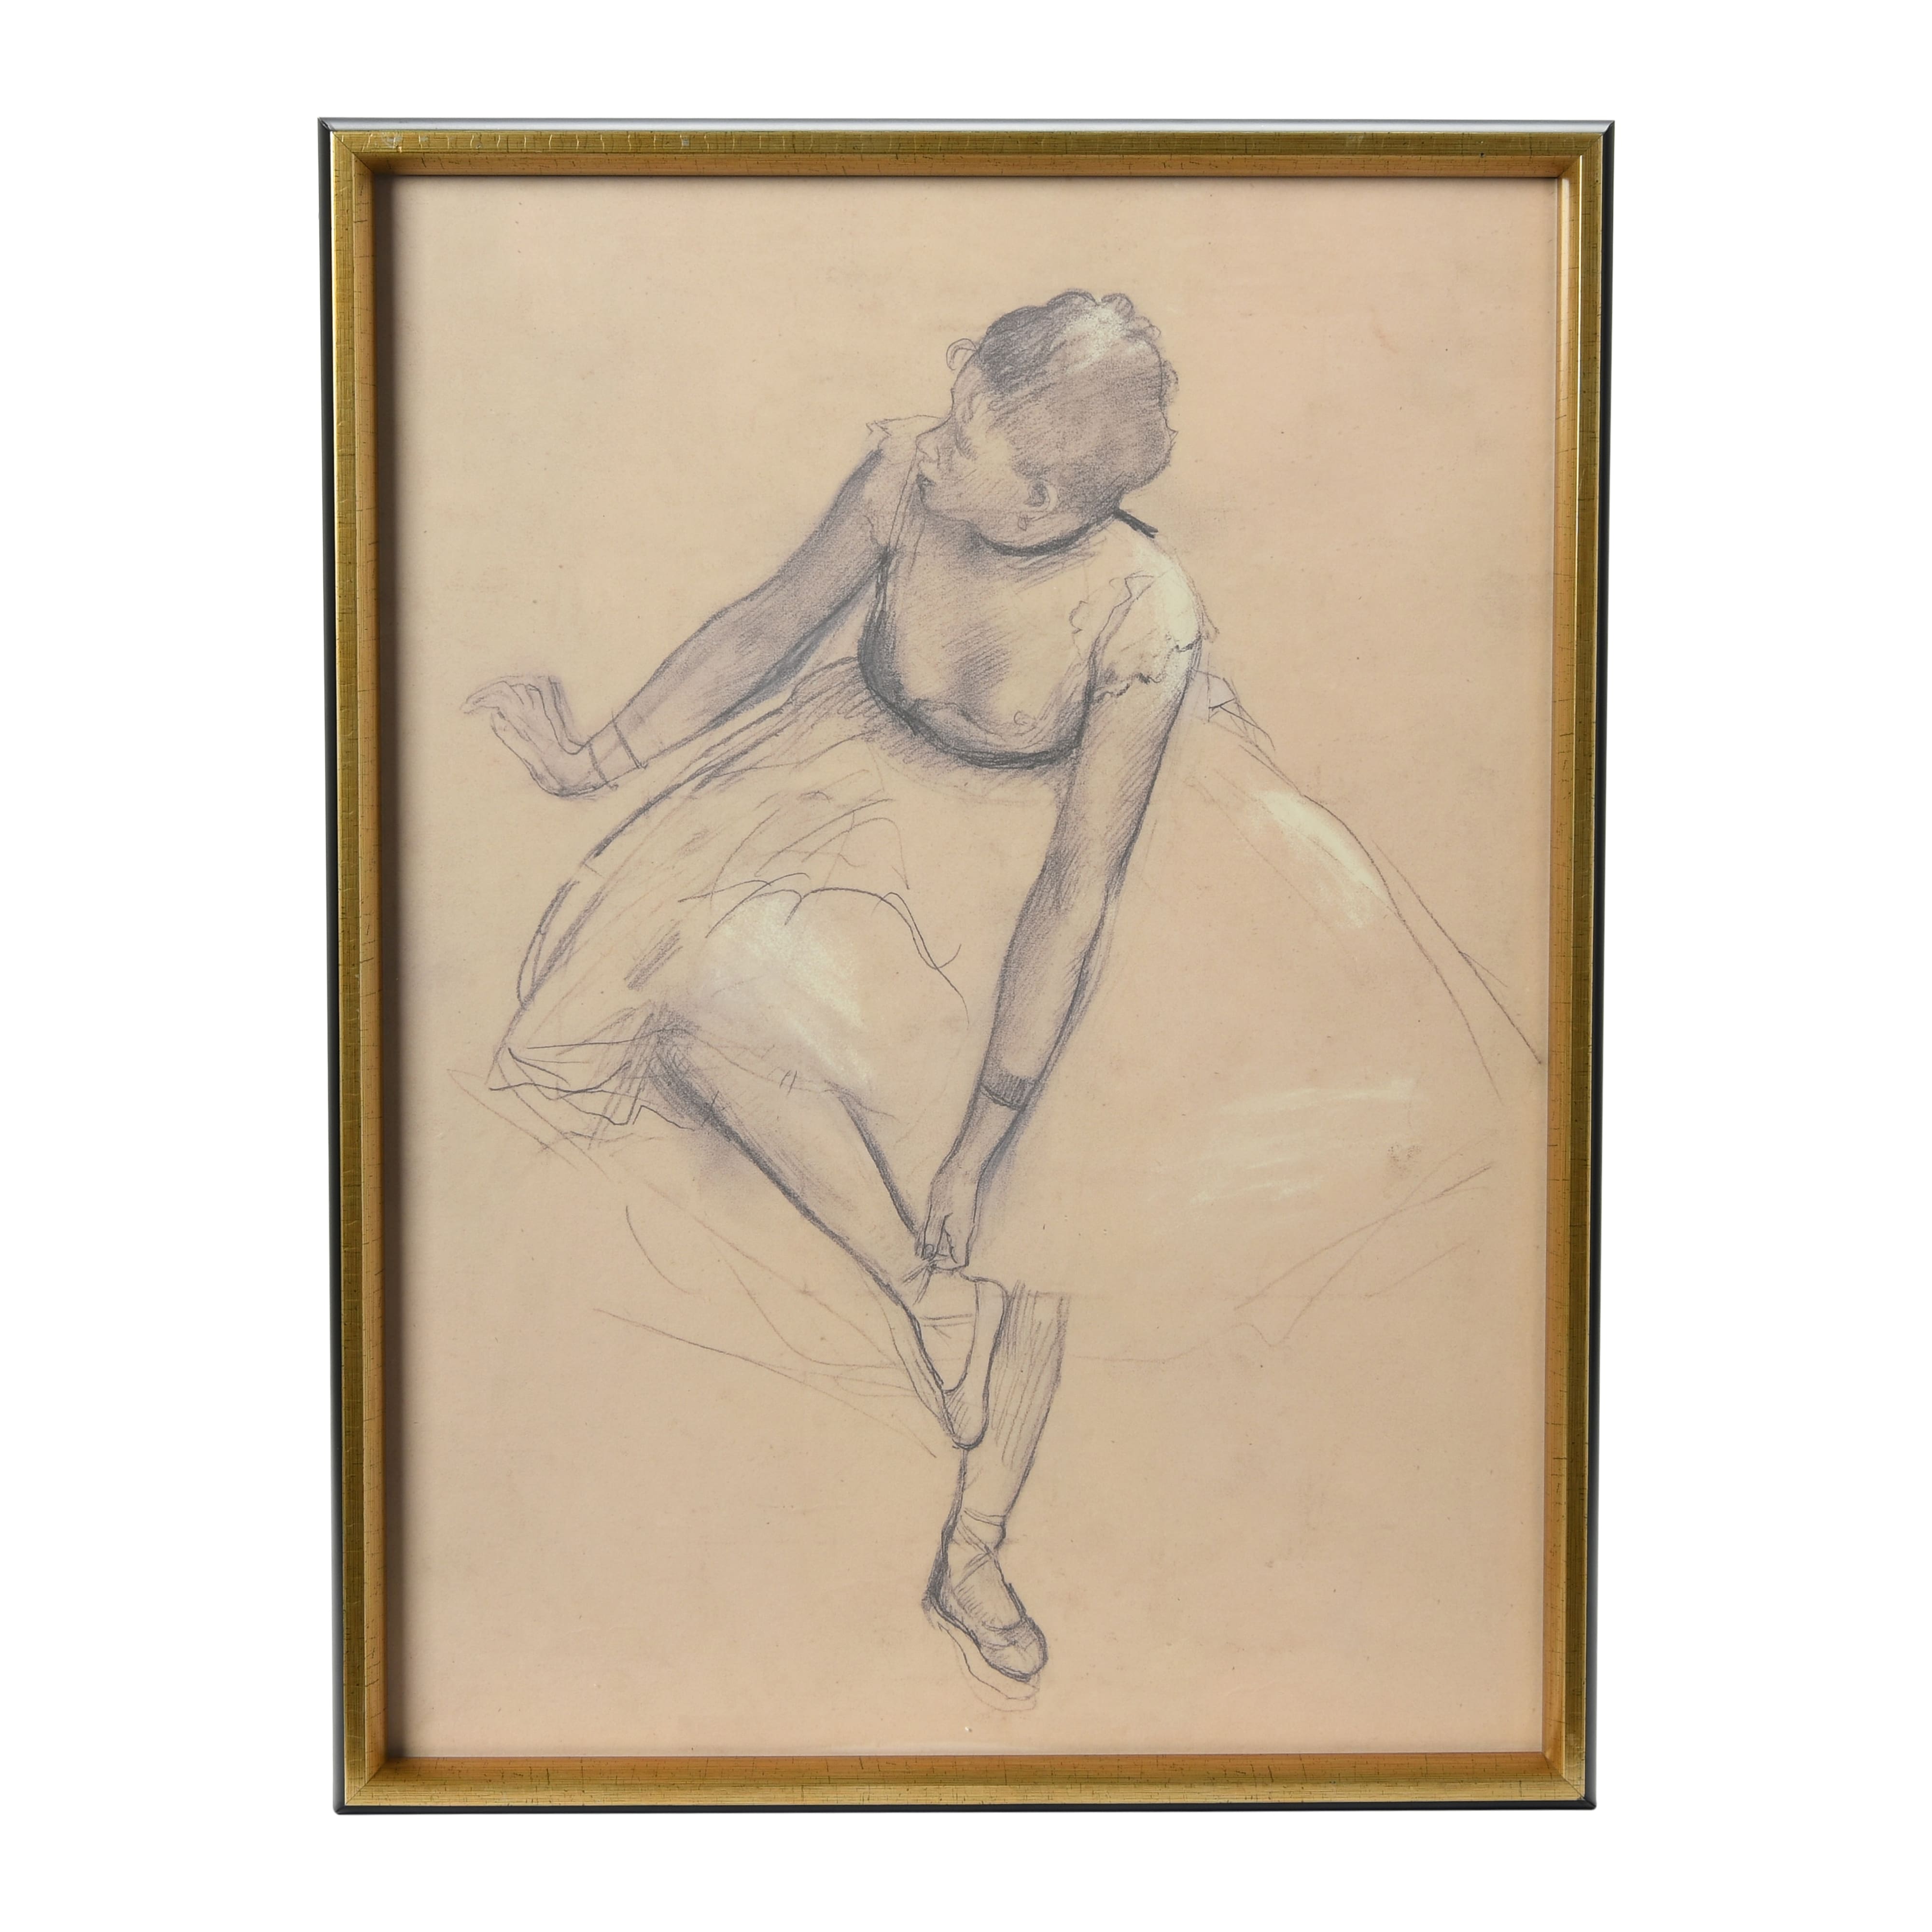 Edgar Degas  Two Studies of a Ballet Dancer  Drawings Online  The Morgan  Library  Museum